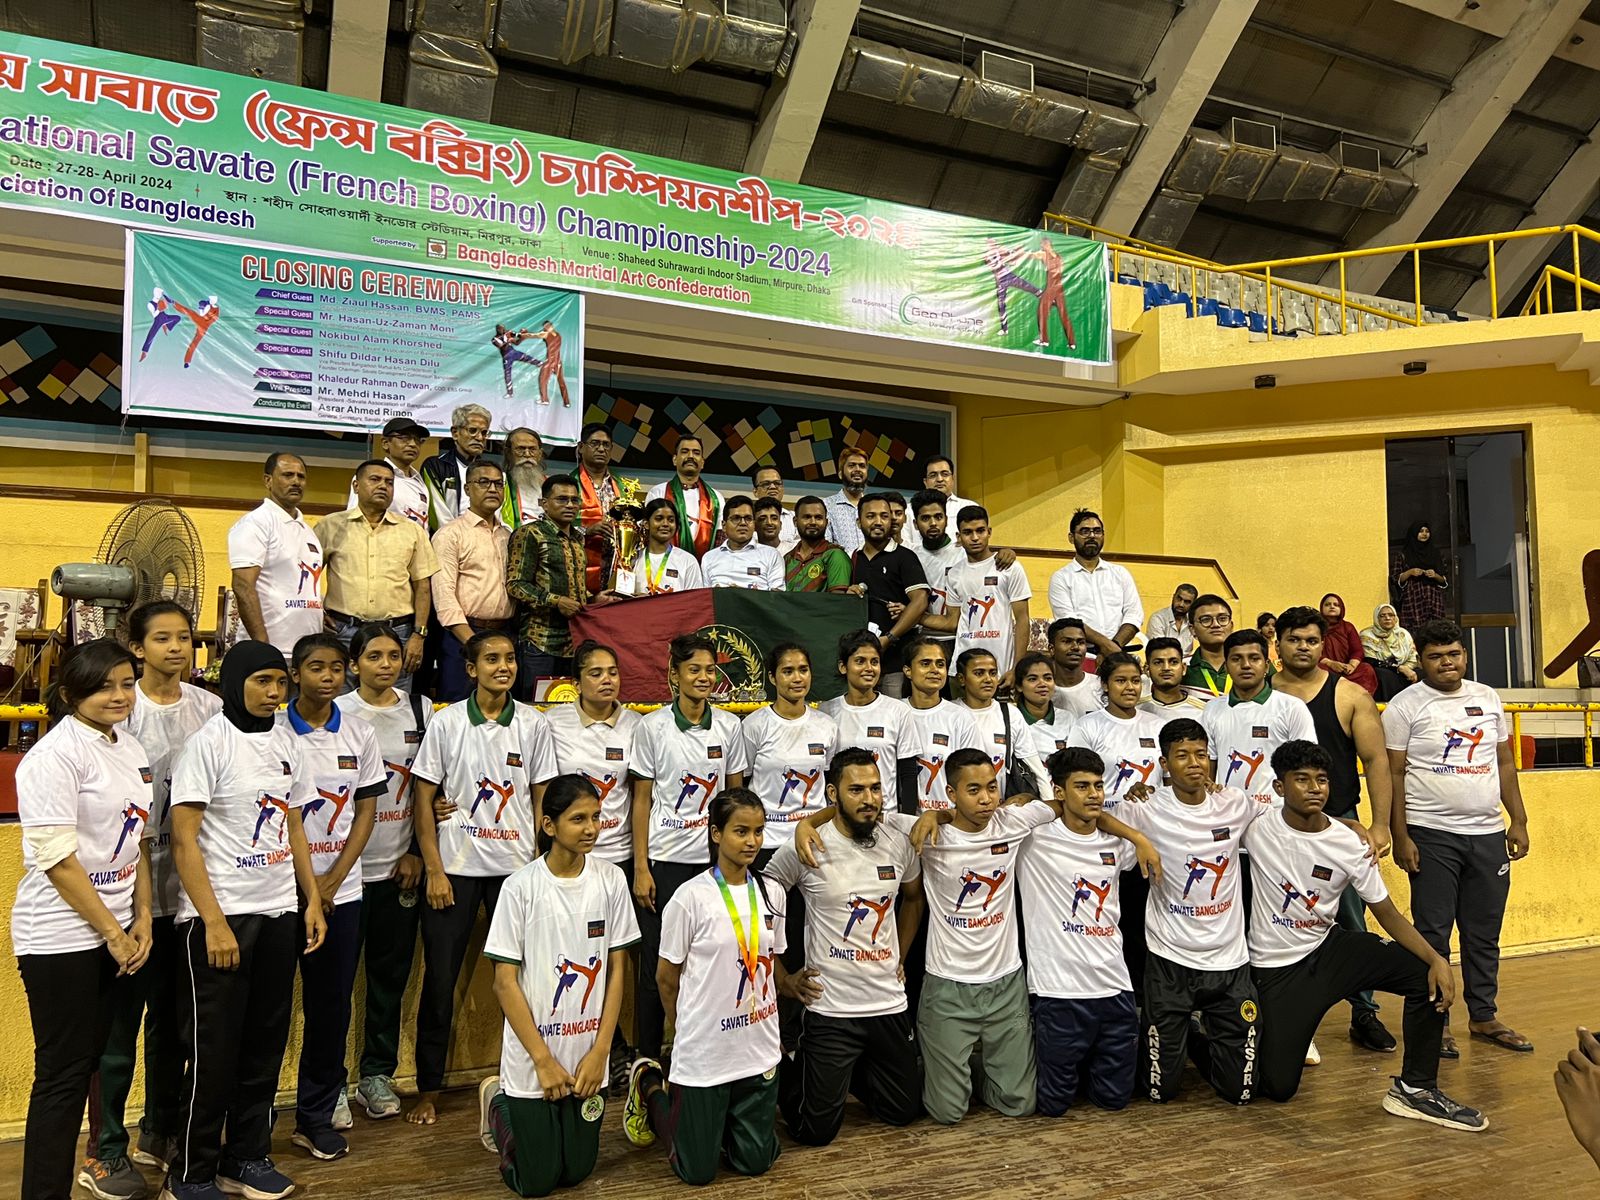 4th Bangladesh National Savate championship 2024 